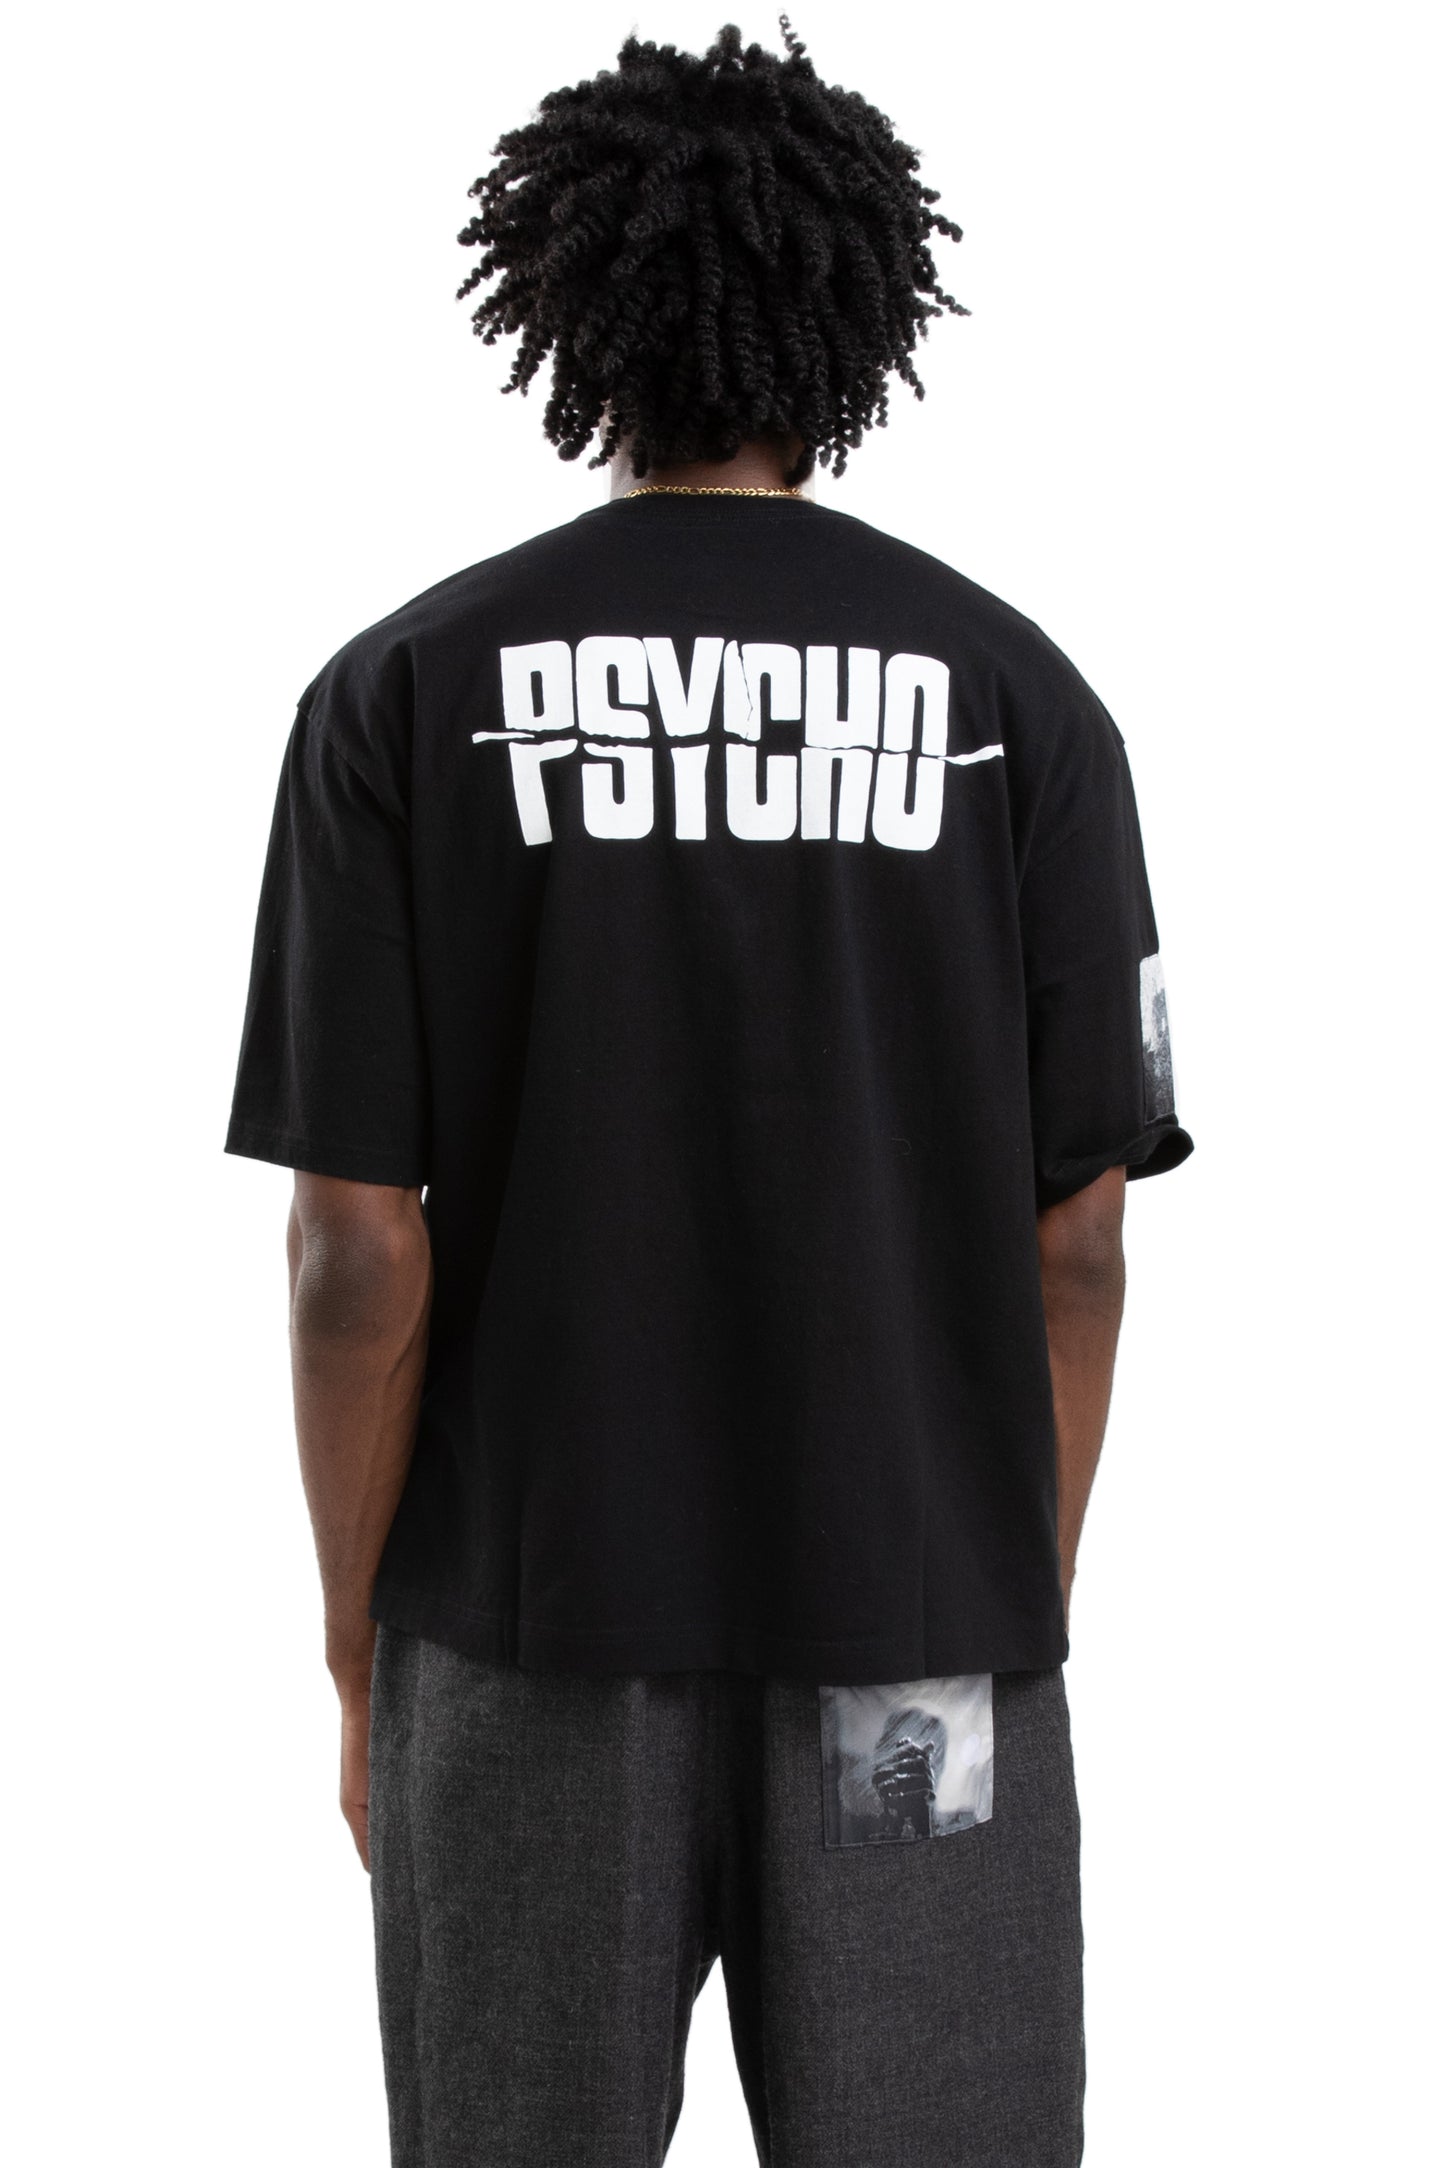 "Psycho" T-Shirt